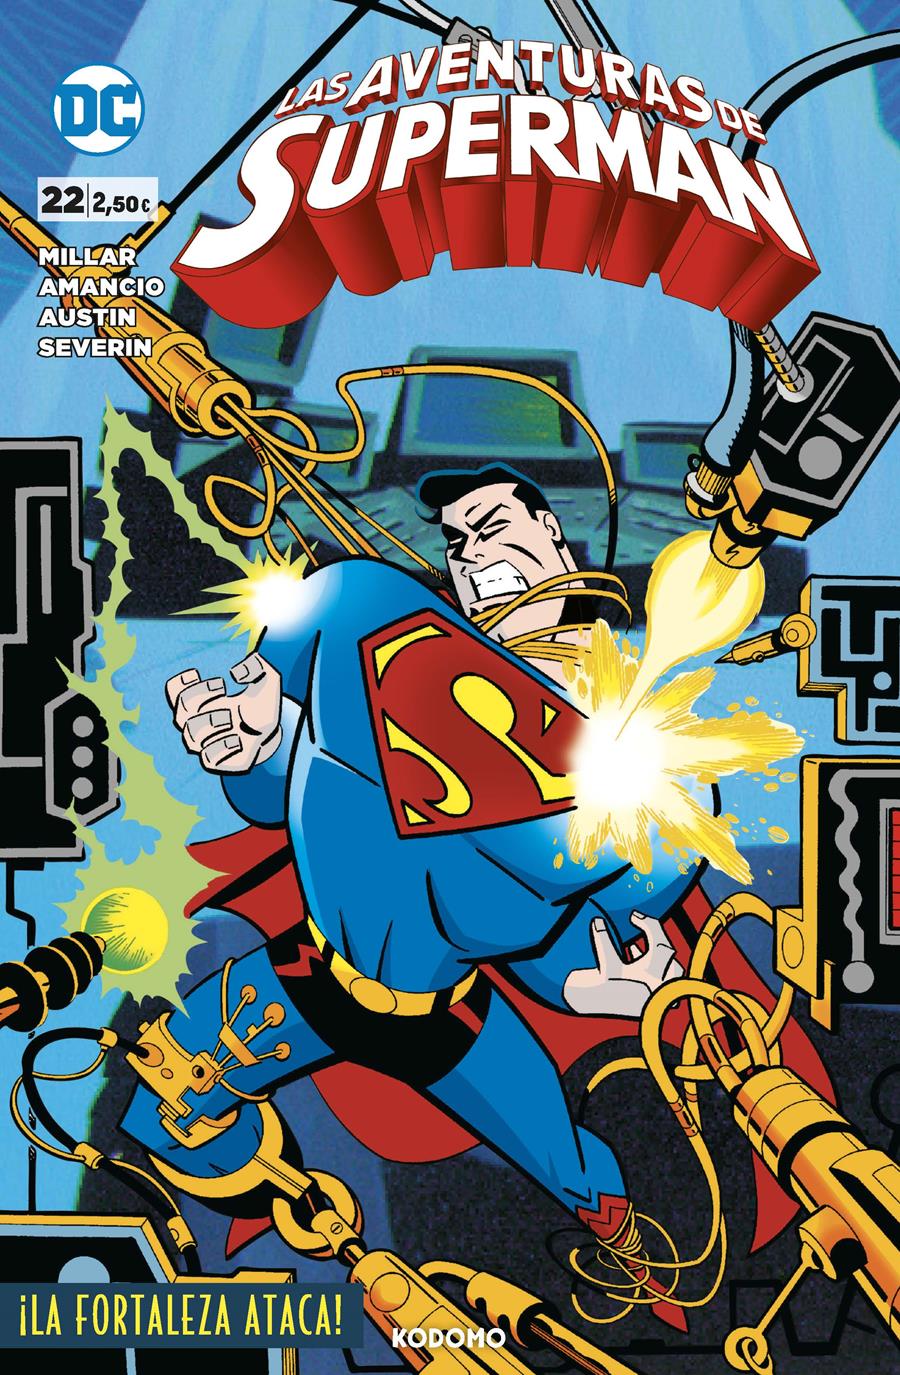 Las aventuras de Superman núm. 22 | N0223-ECC44 | Aluir Amancio / Mark Millar | Terra de Còmic - Tu tienda de cómics online especializada en cómics, manga y merchandising